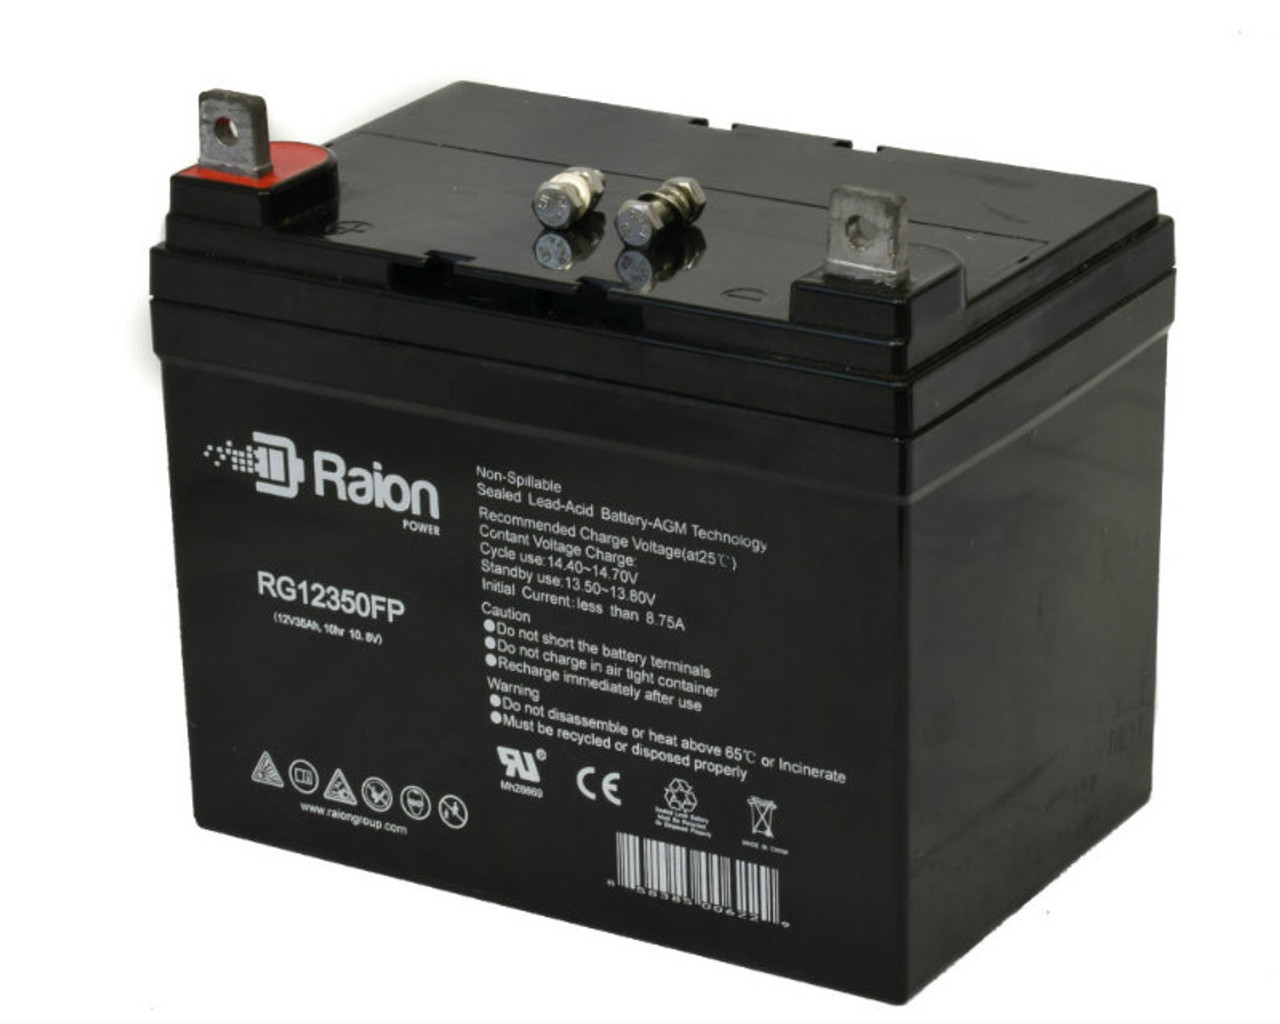 Raion Power Replacement 12V 35Ah RG12350FP Battery for Bolens 13AG683H163